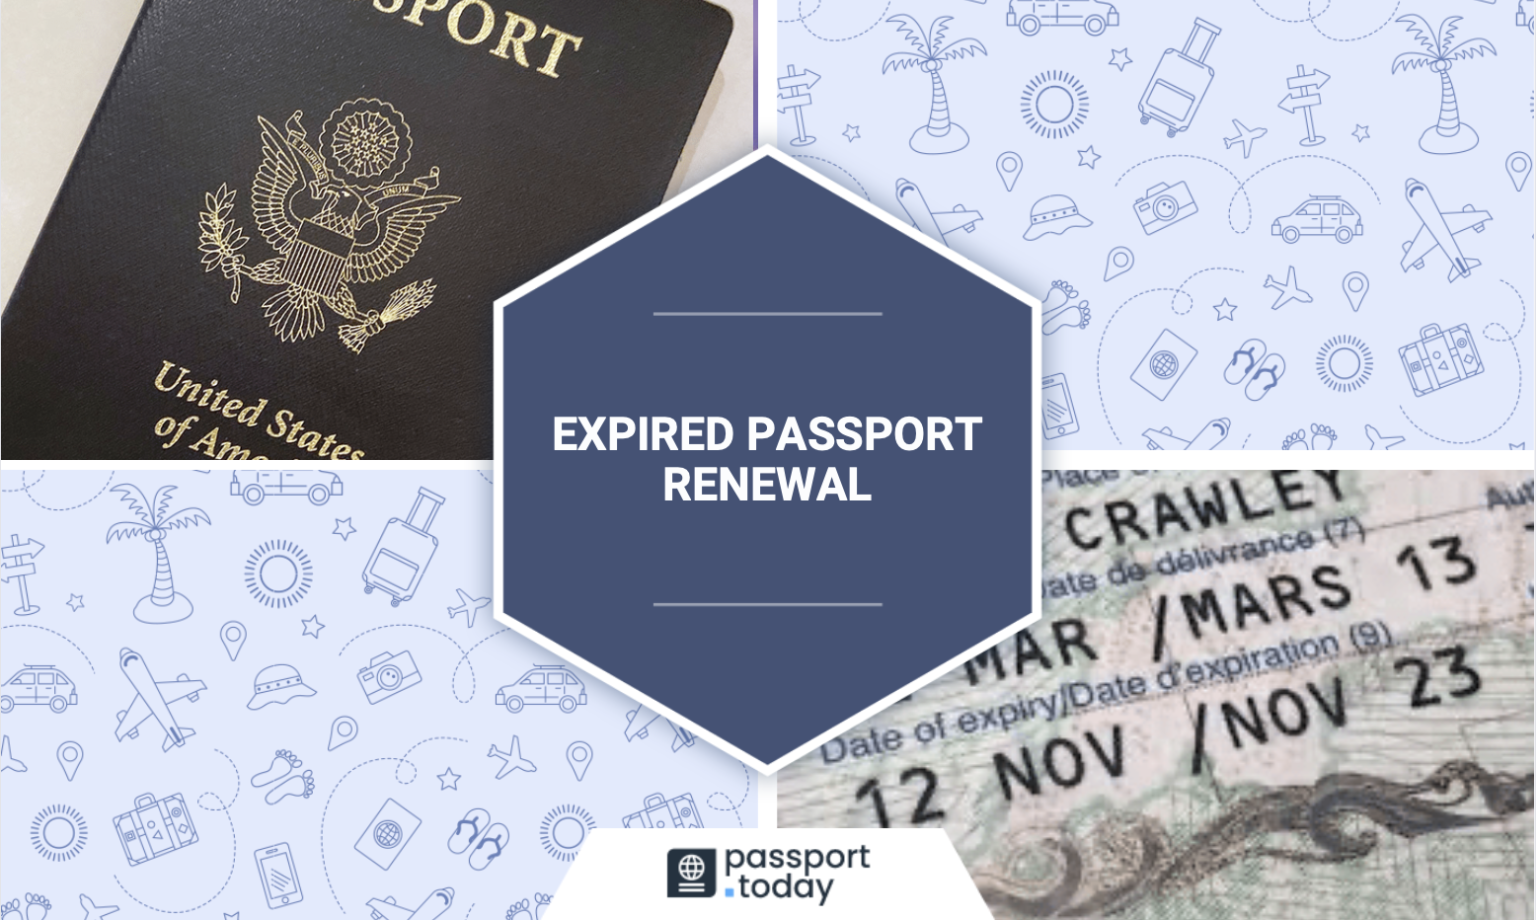 travel to us on expired passport